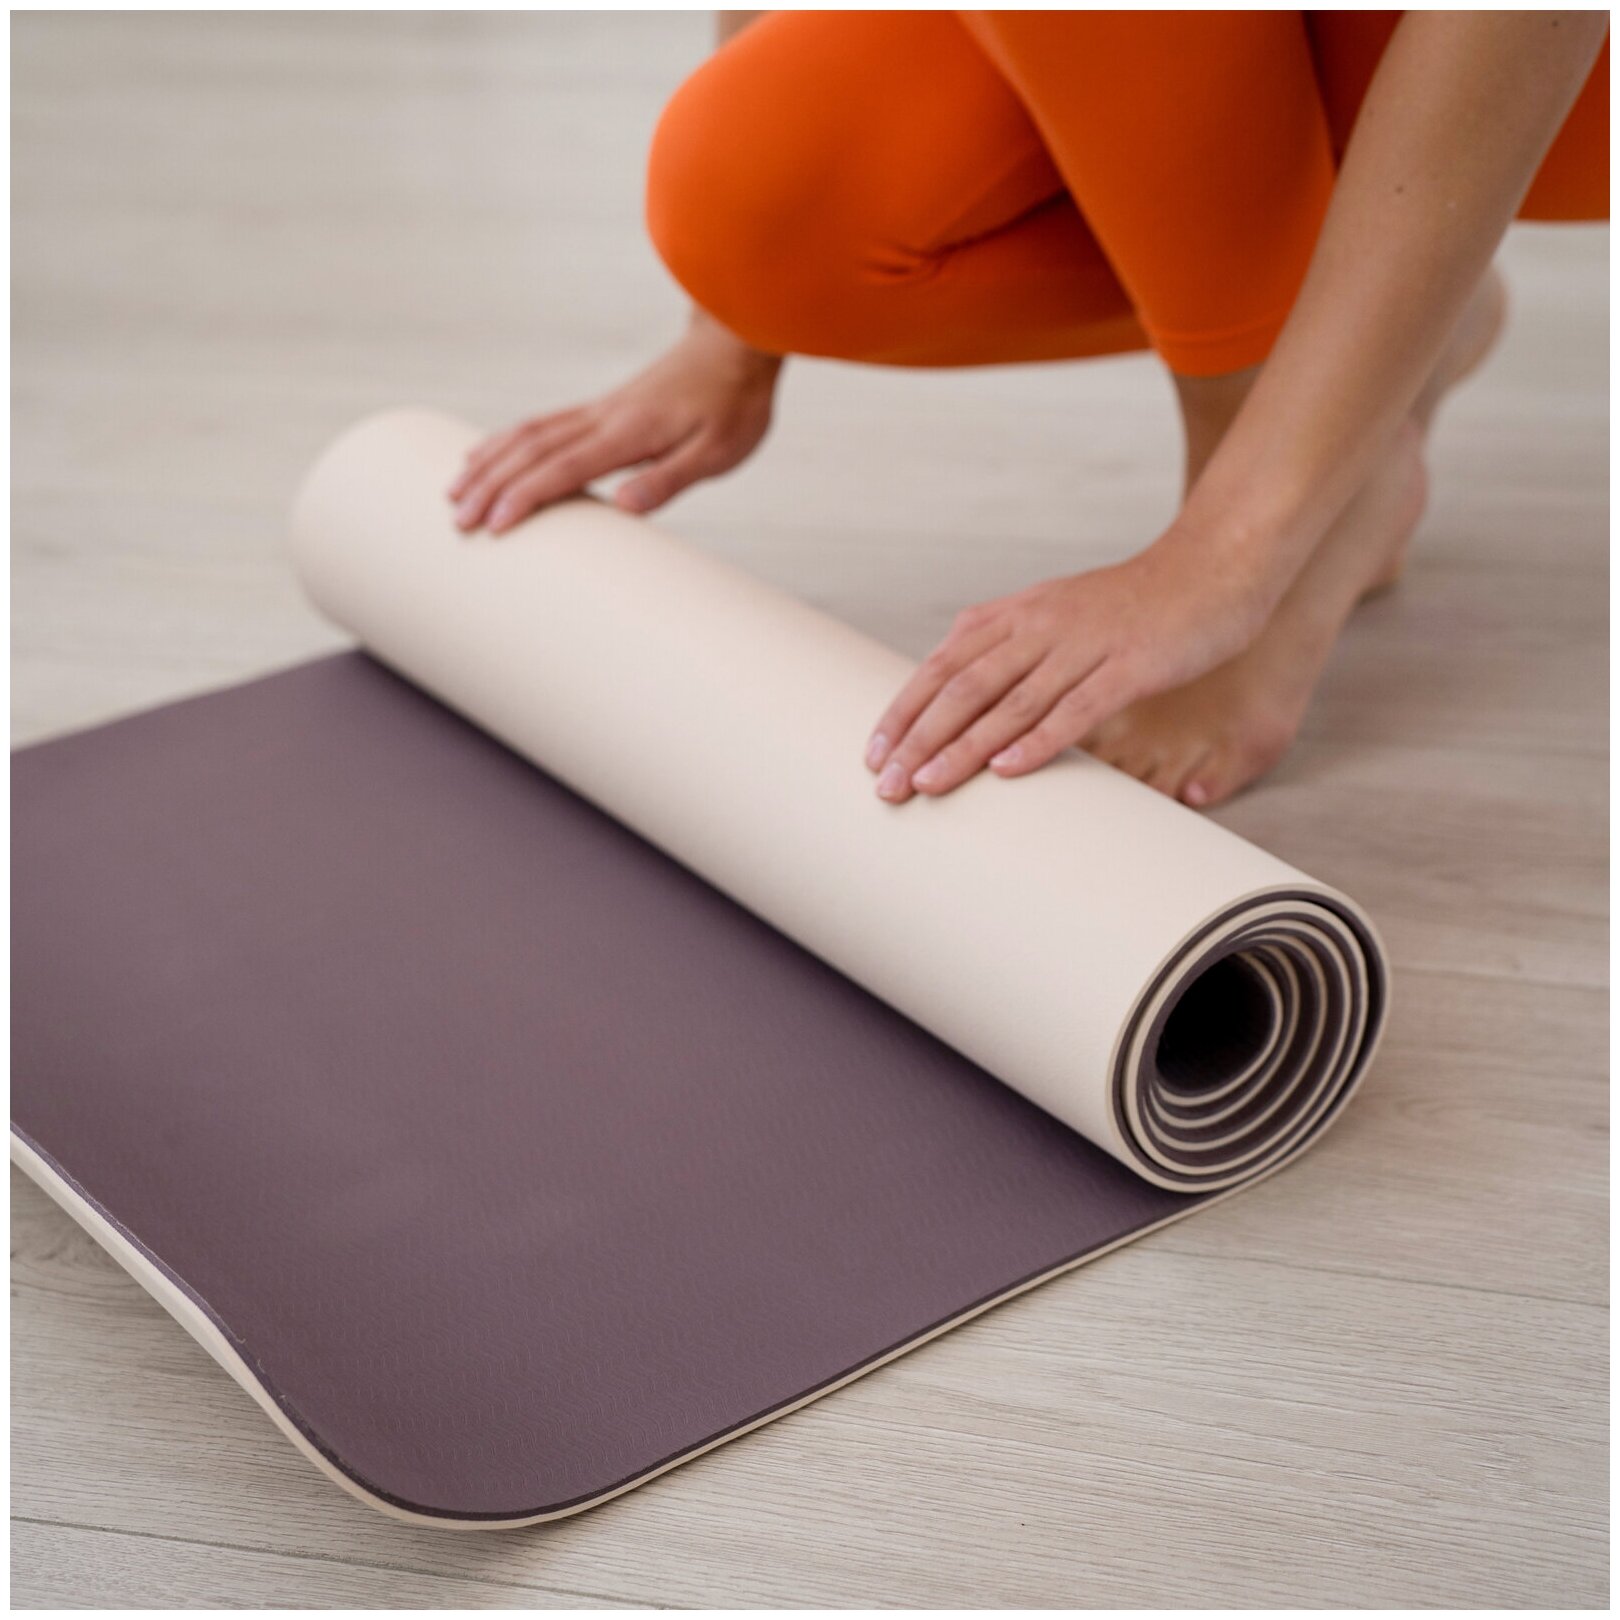 Коврик Sangh, для йоги, размер 183 х 61 х 0,6 см, двухсторонний, цвет бежевый, коричневый